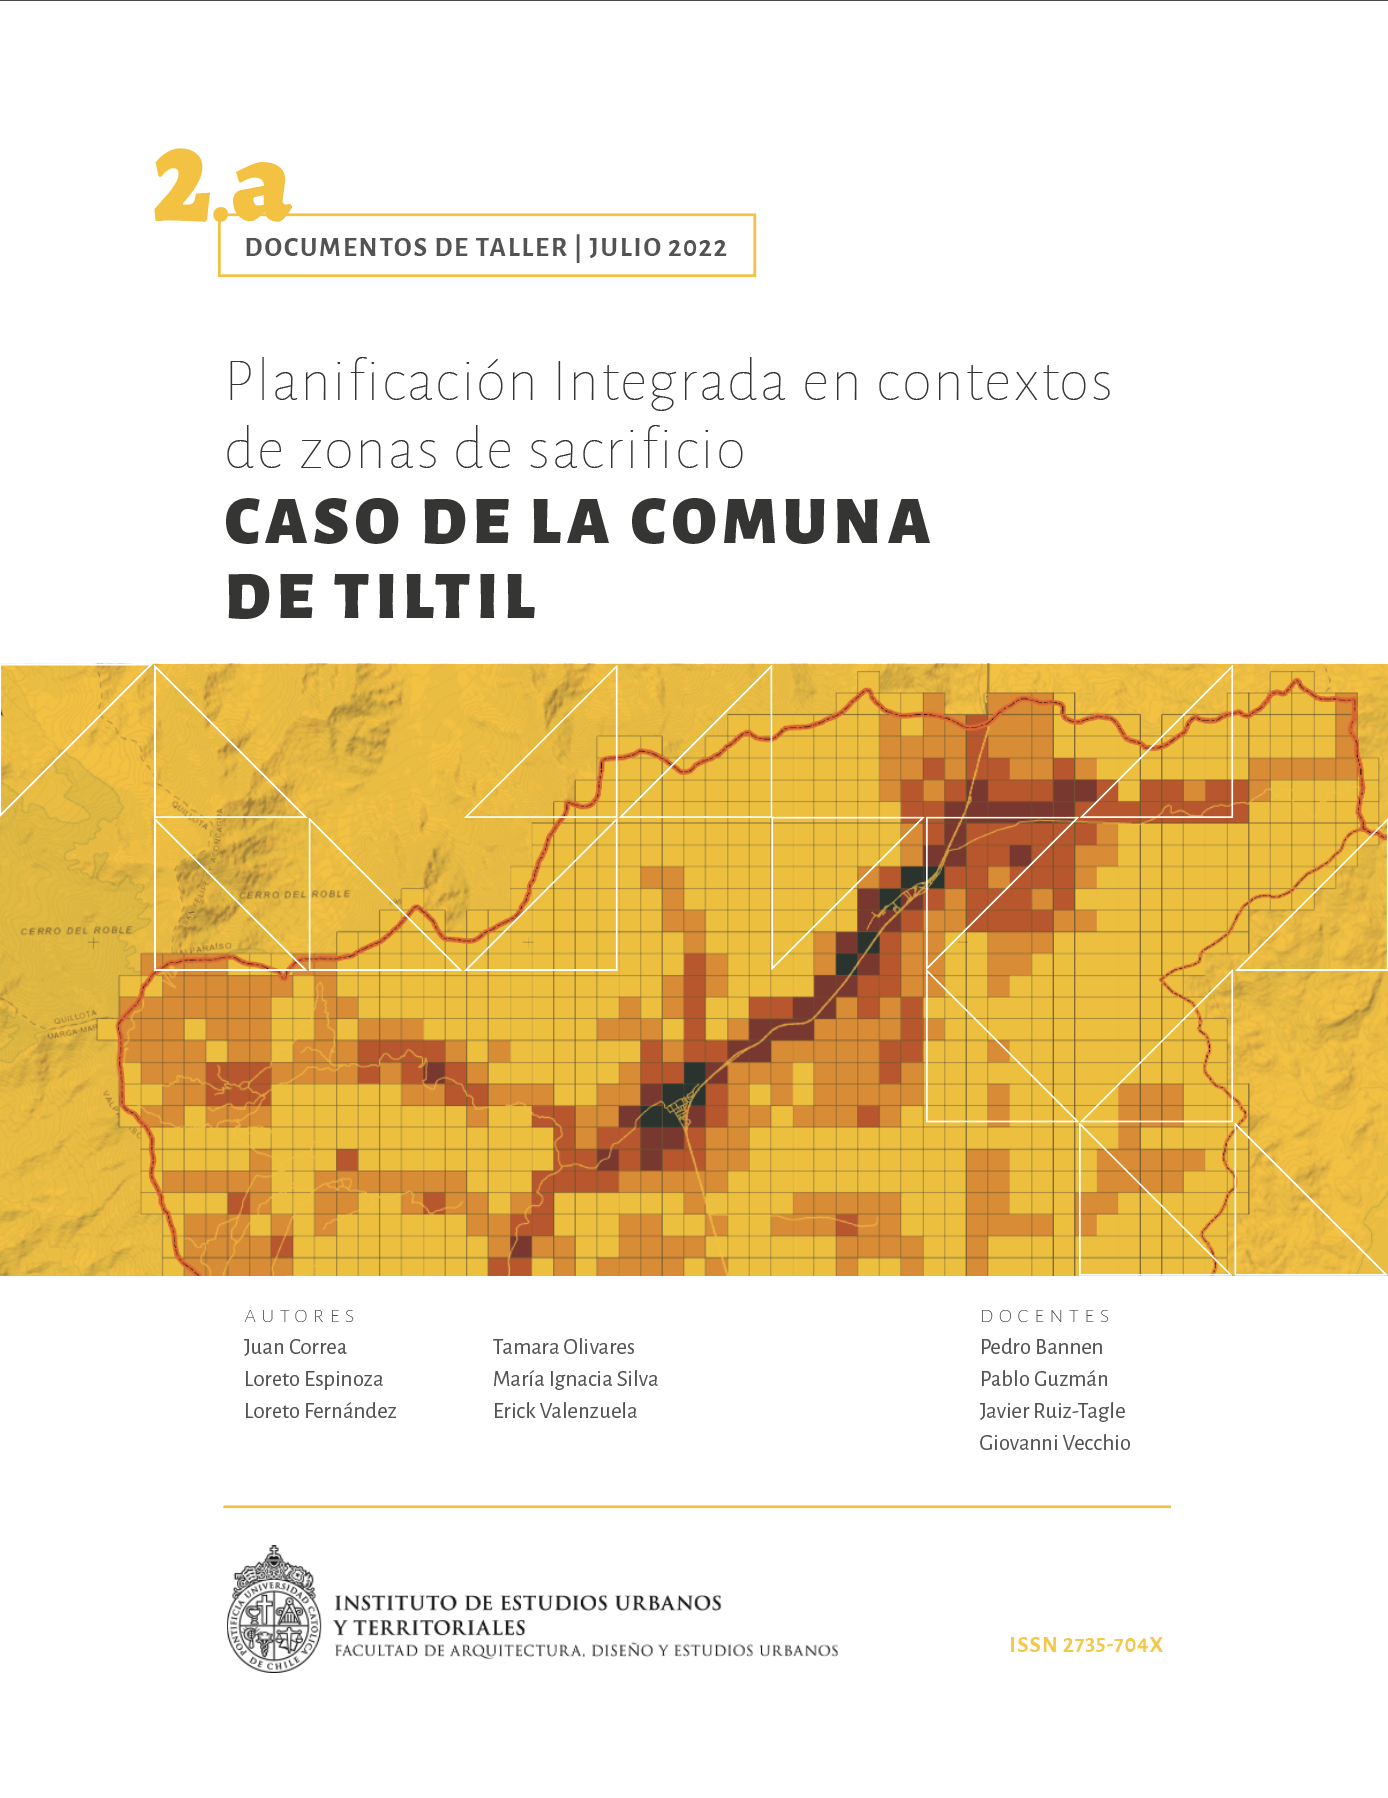 Planificación Integrada en contextos de zonas de sacrificio – Caso de la comuna de Tiltil